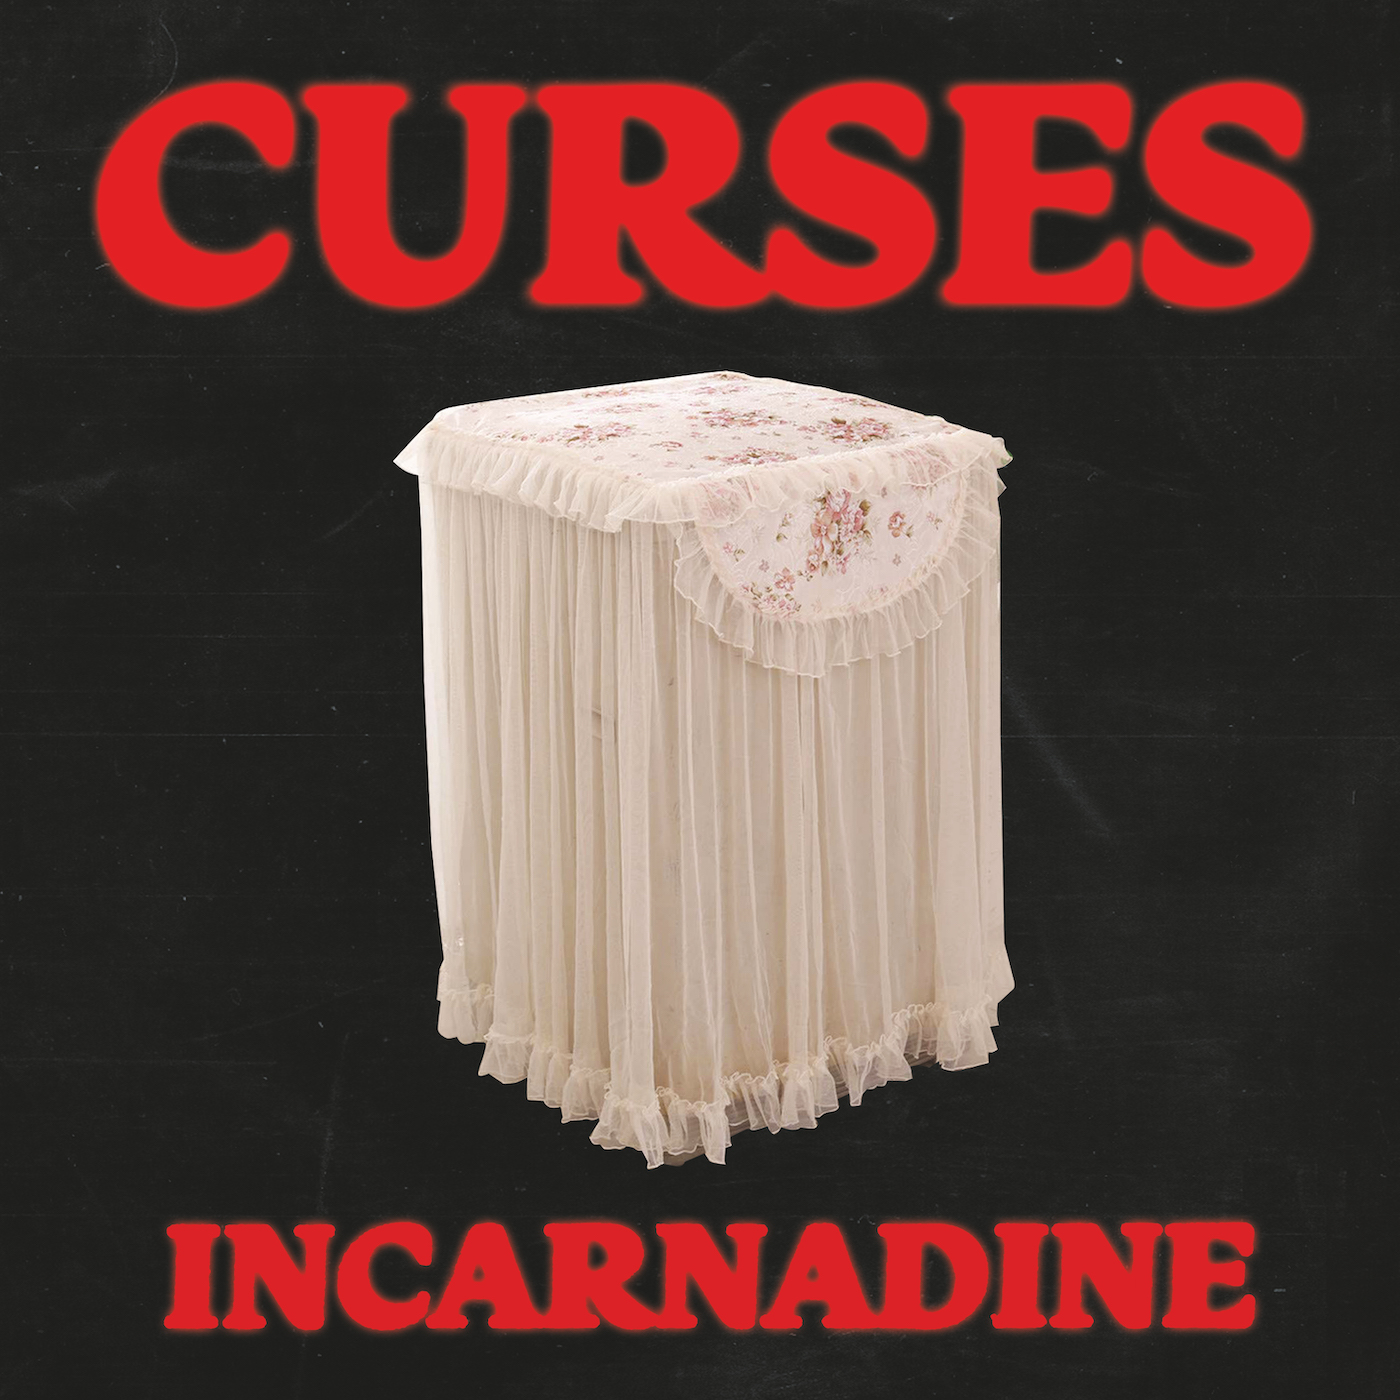 Curses, “Incardine”